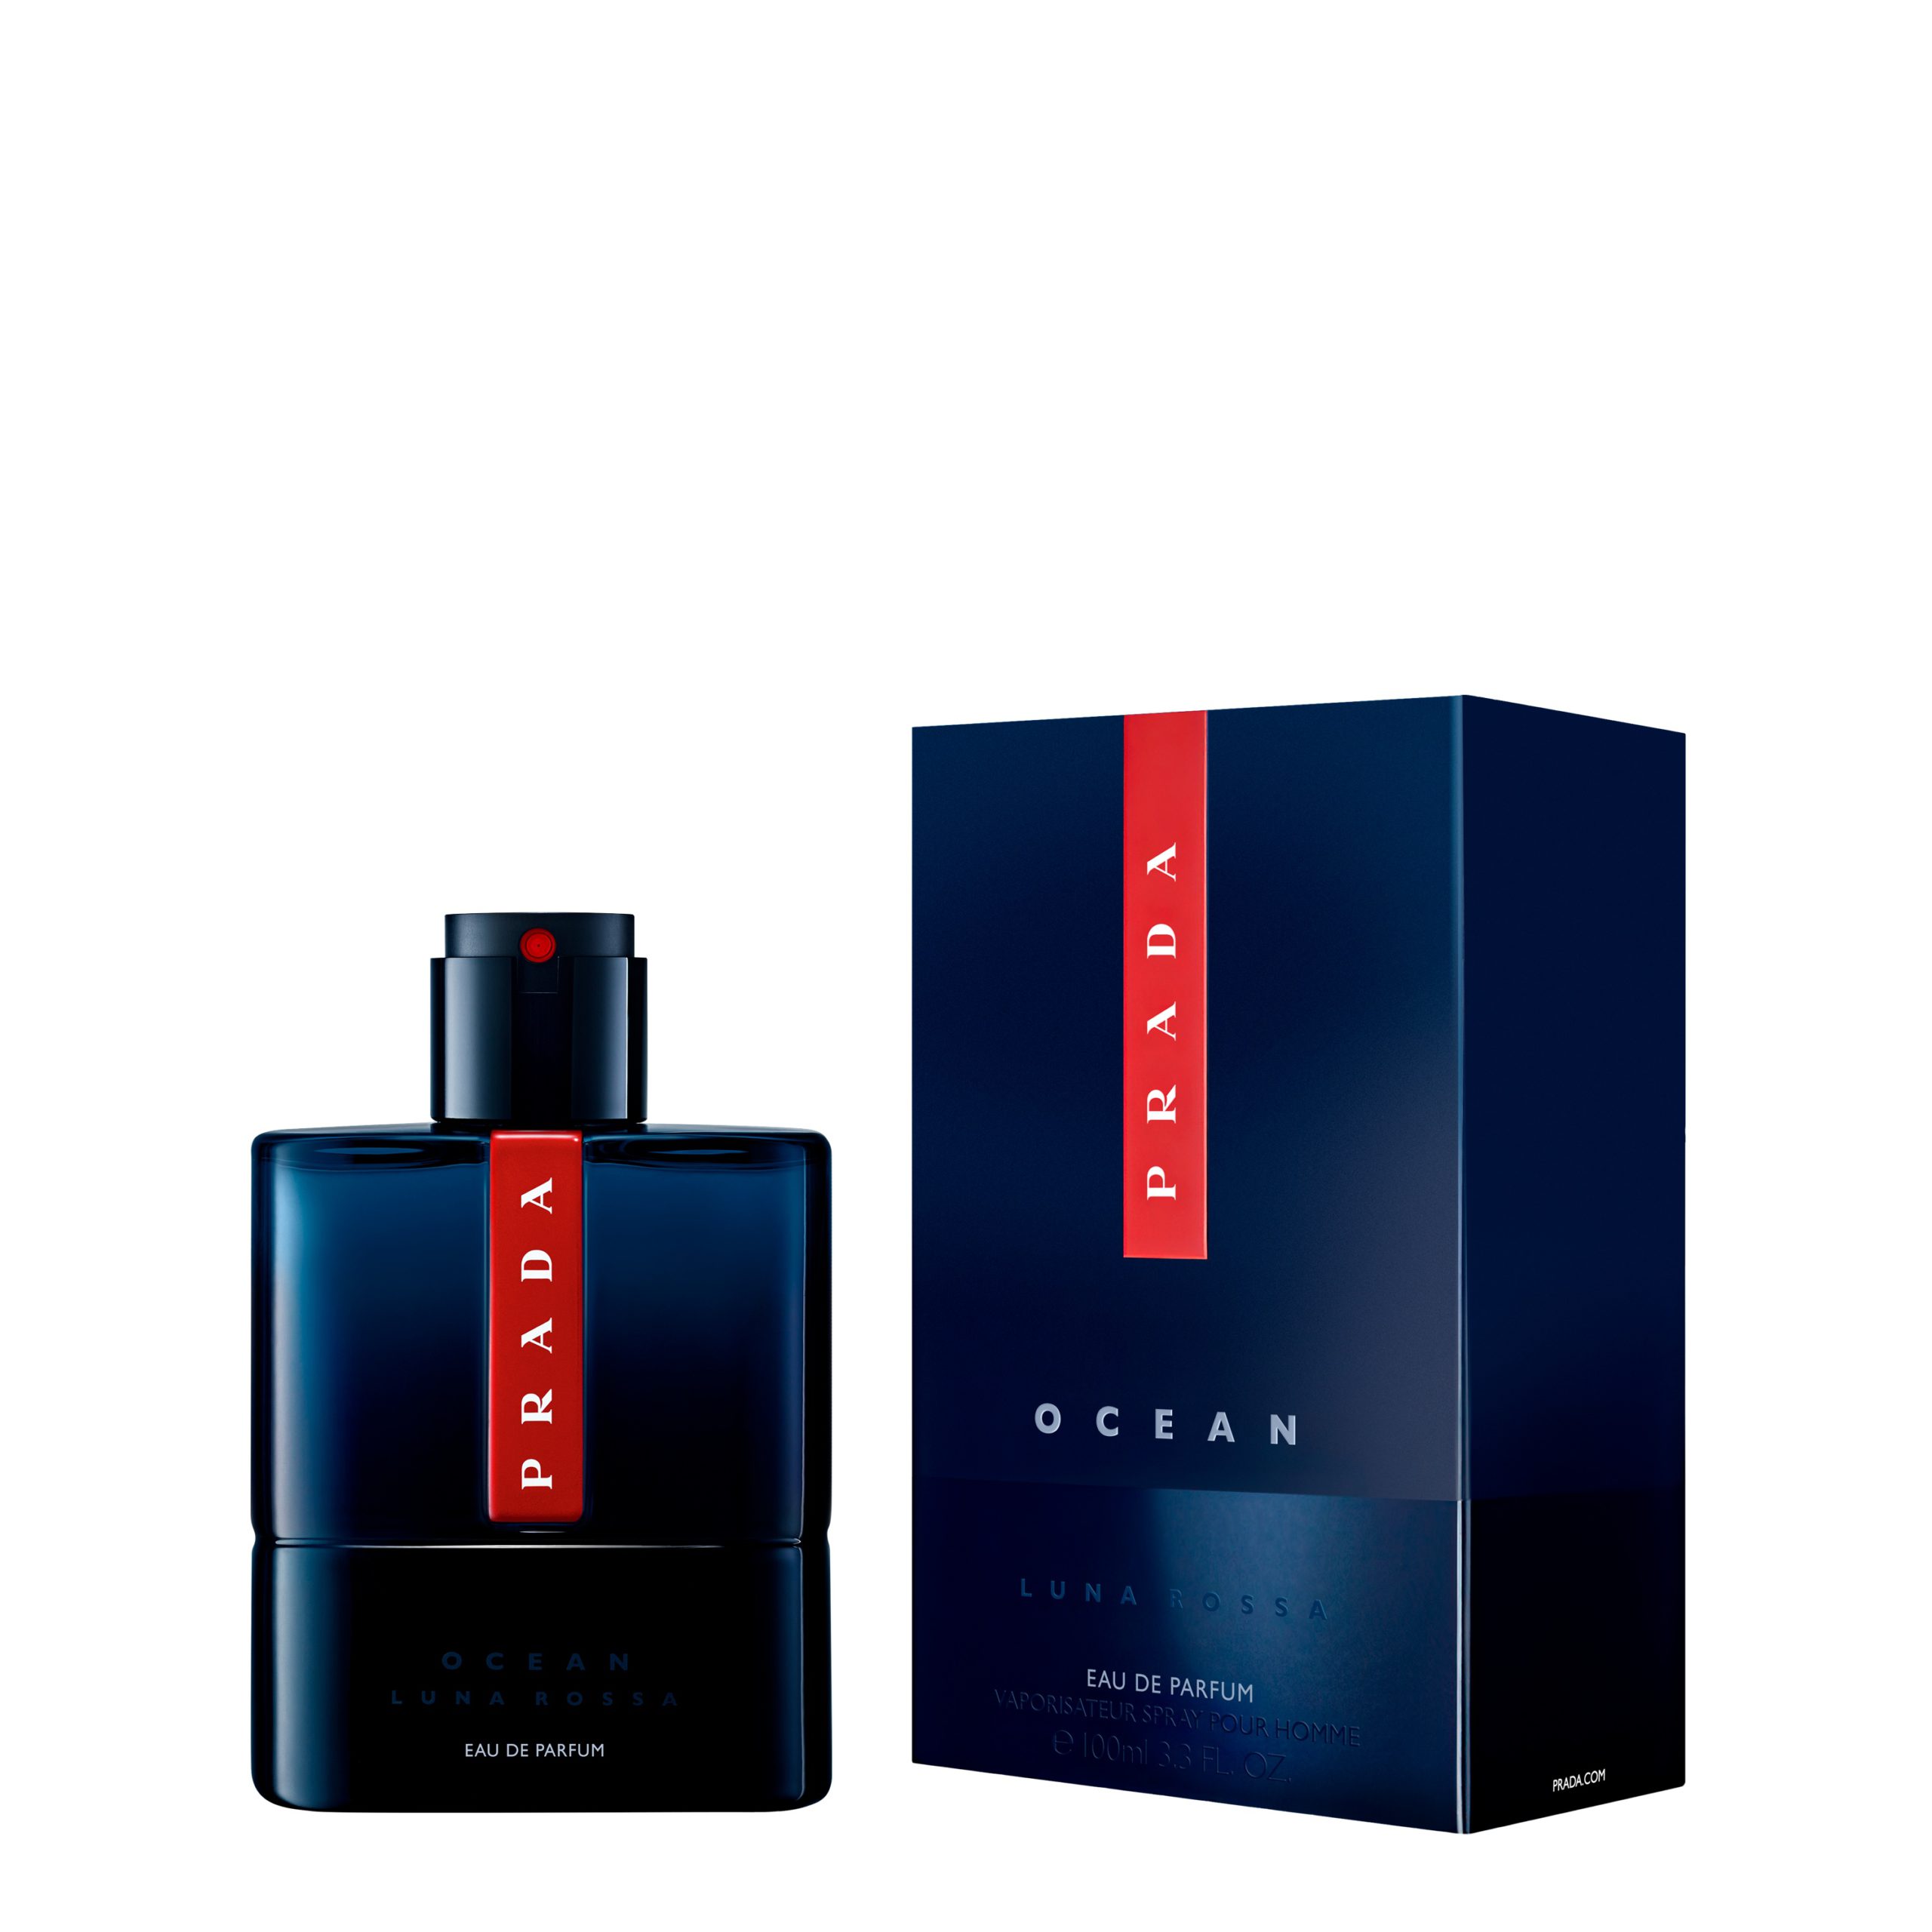 prada fragrance lunarossa edpocean 100ml 03614273768832 outerpack boxandproduct